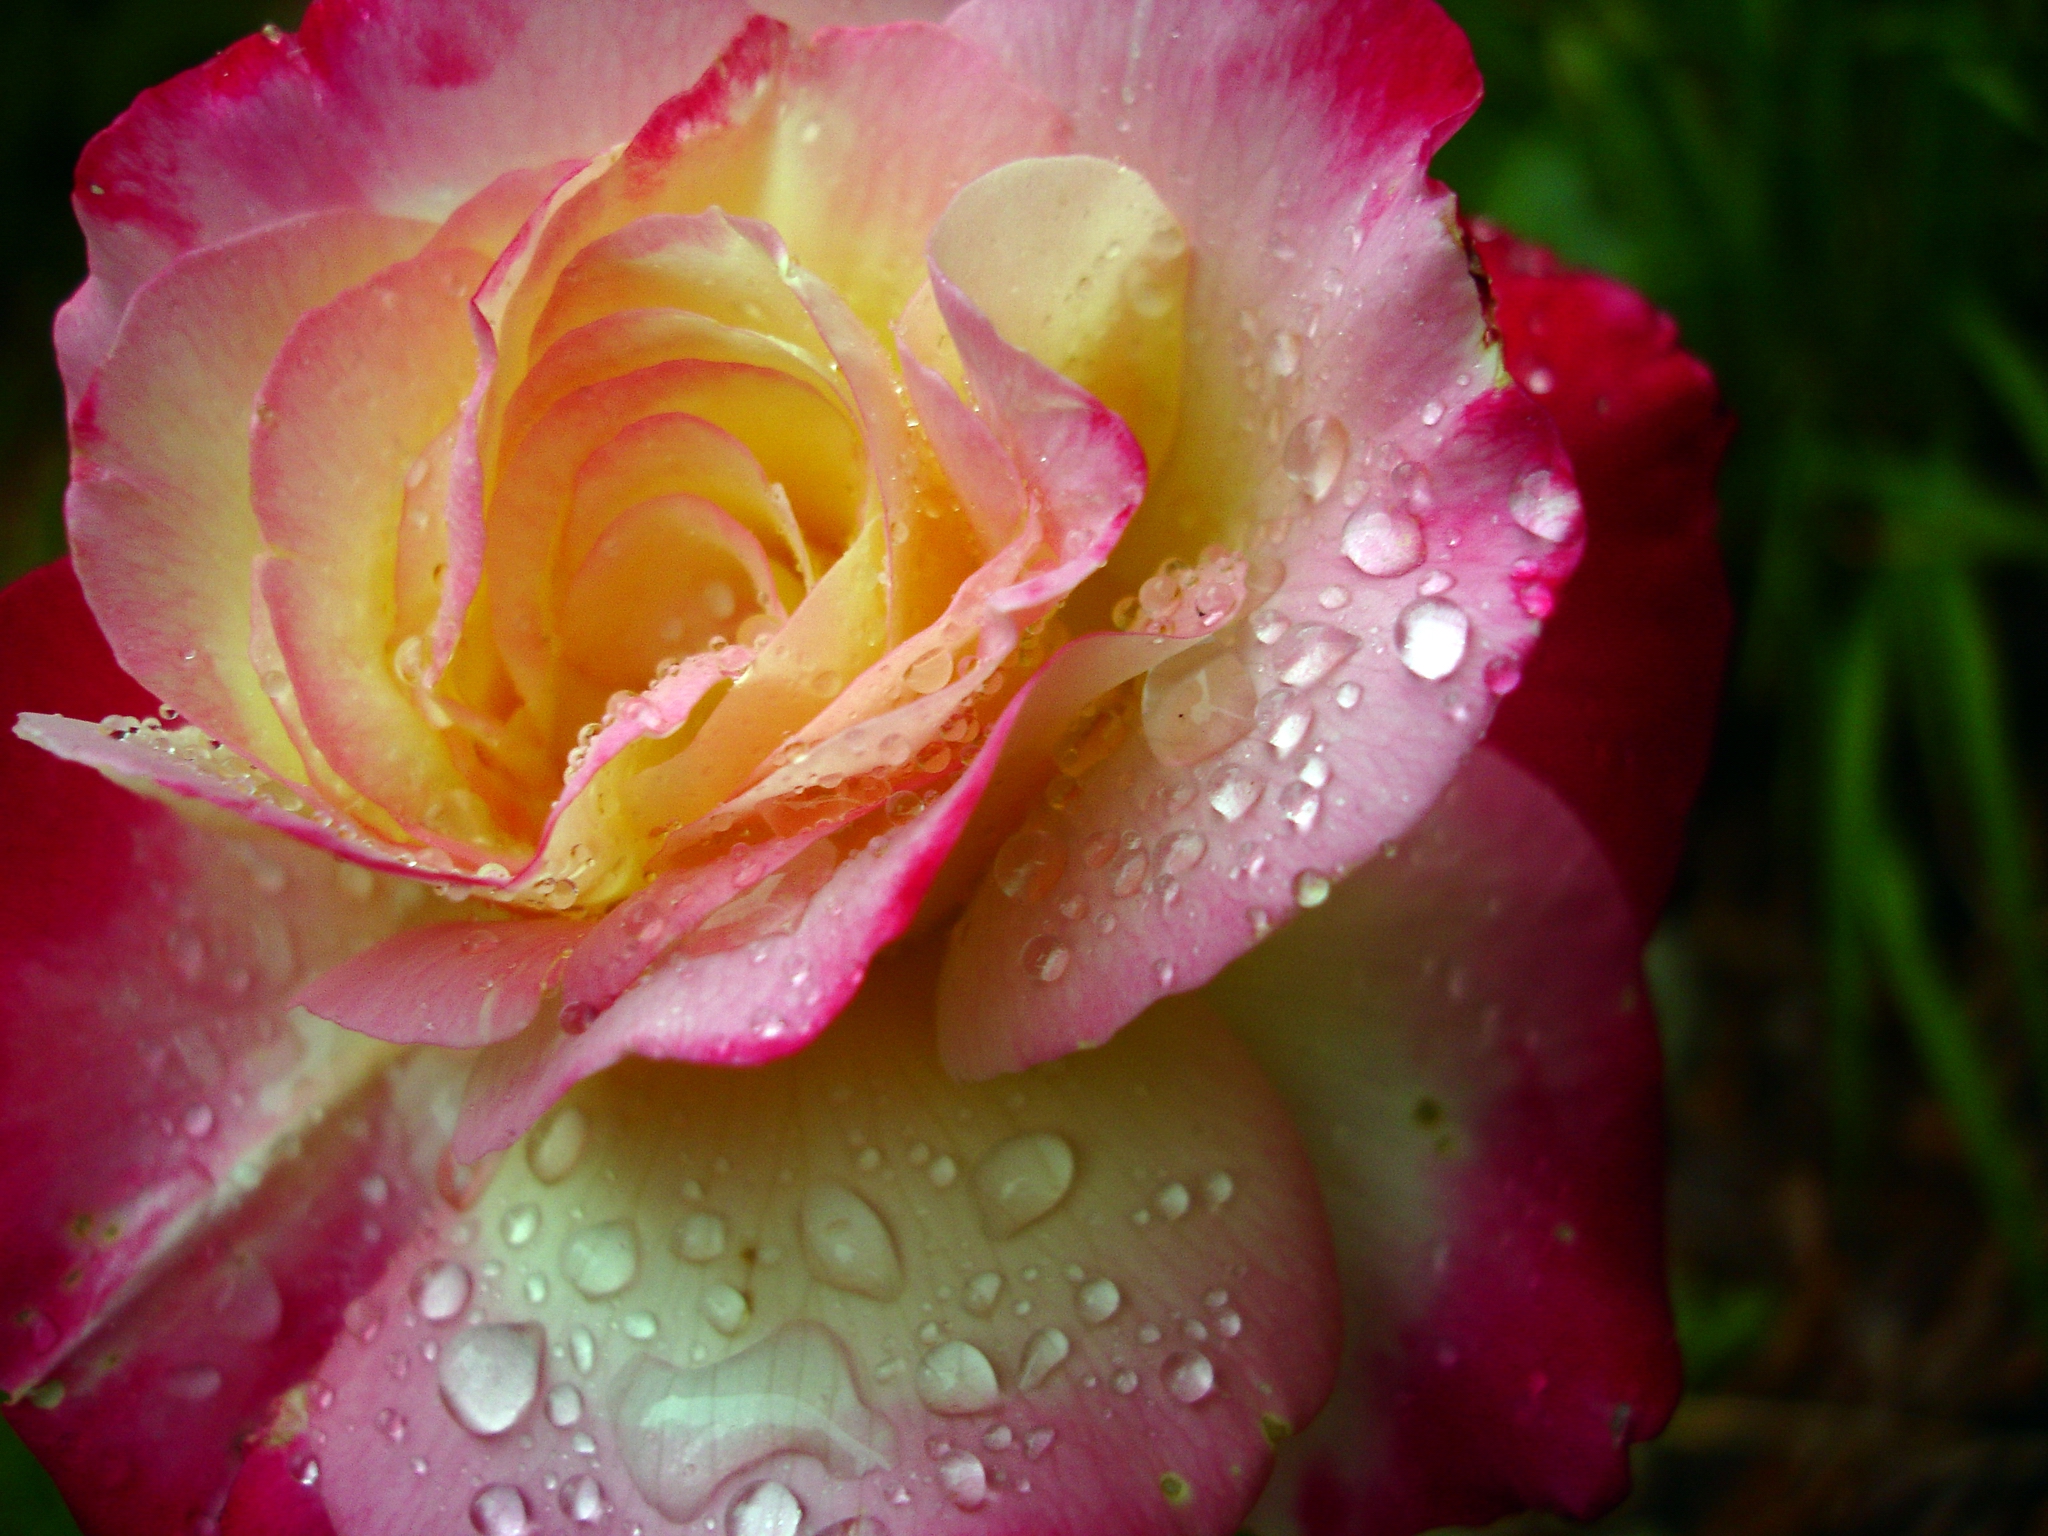 Raindrops on rose  google images